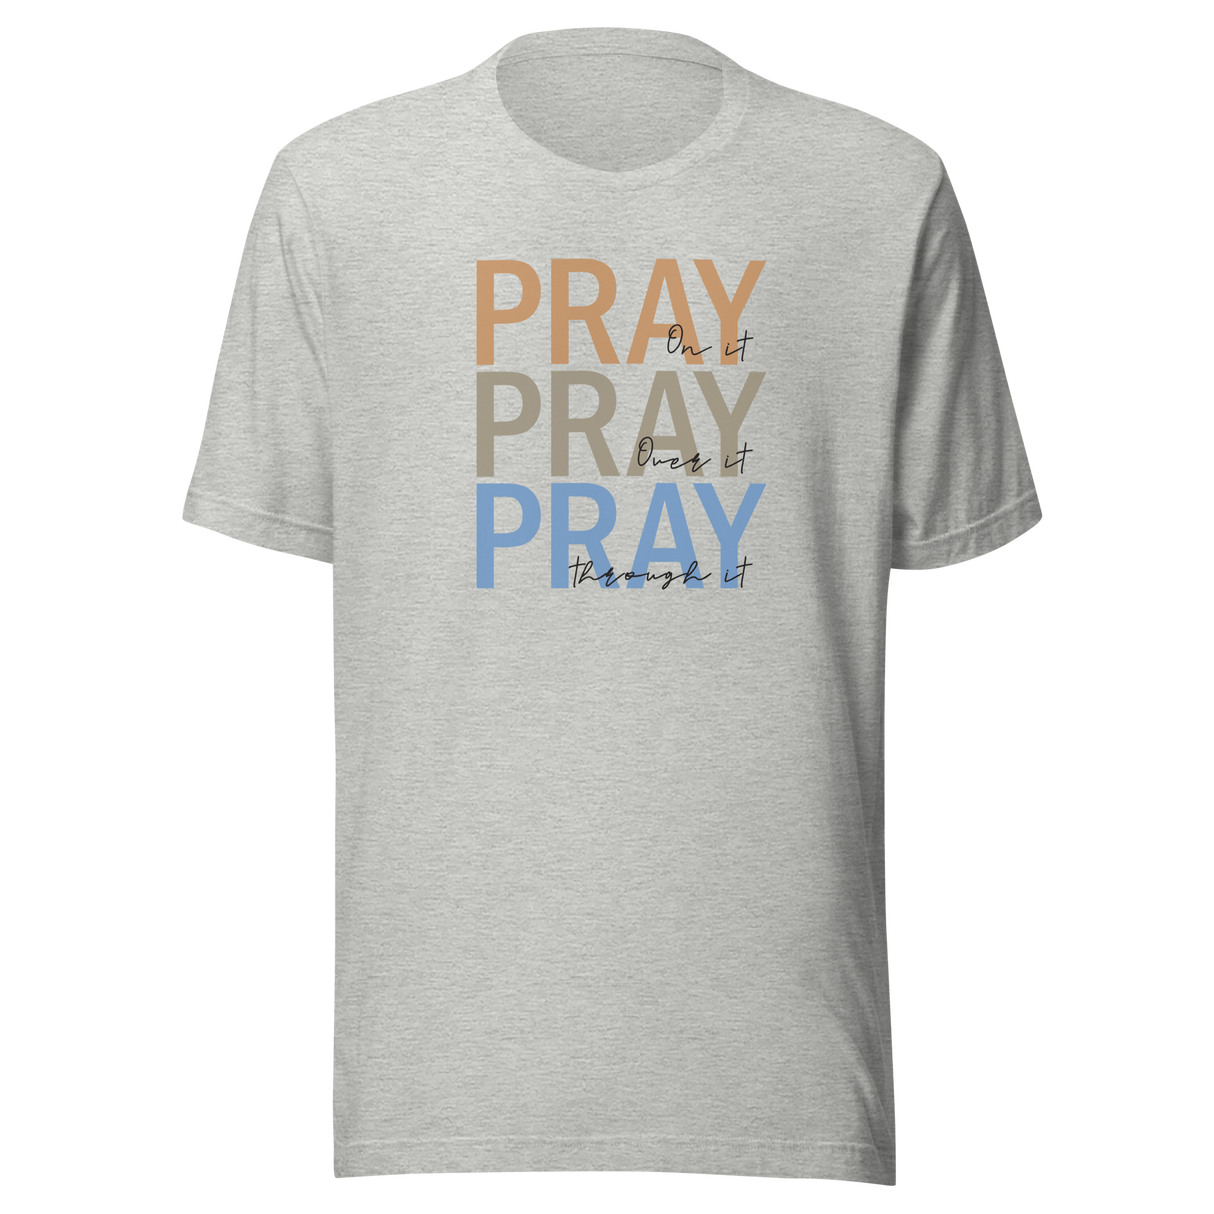 pray-on-it-pray-over-it-pray-through-it-faith-tee-pray-t-shirt-faith-tee-spirituality-t-shirt-devotion-tee#color_athletic-heather